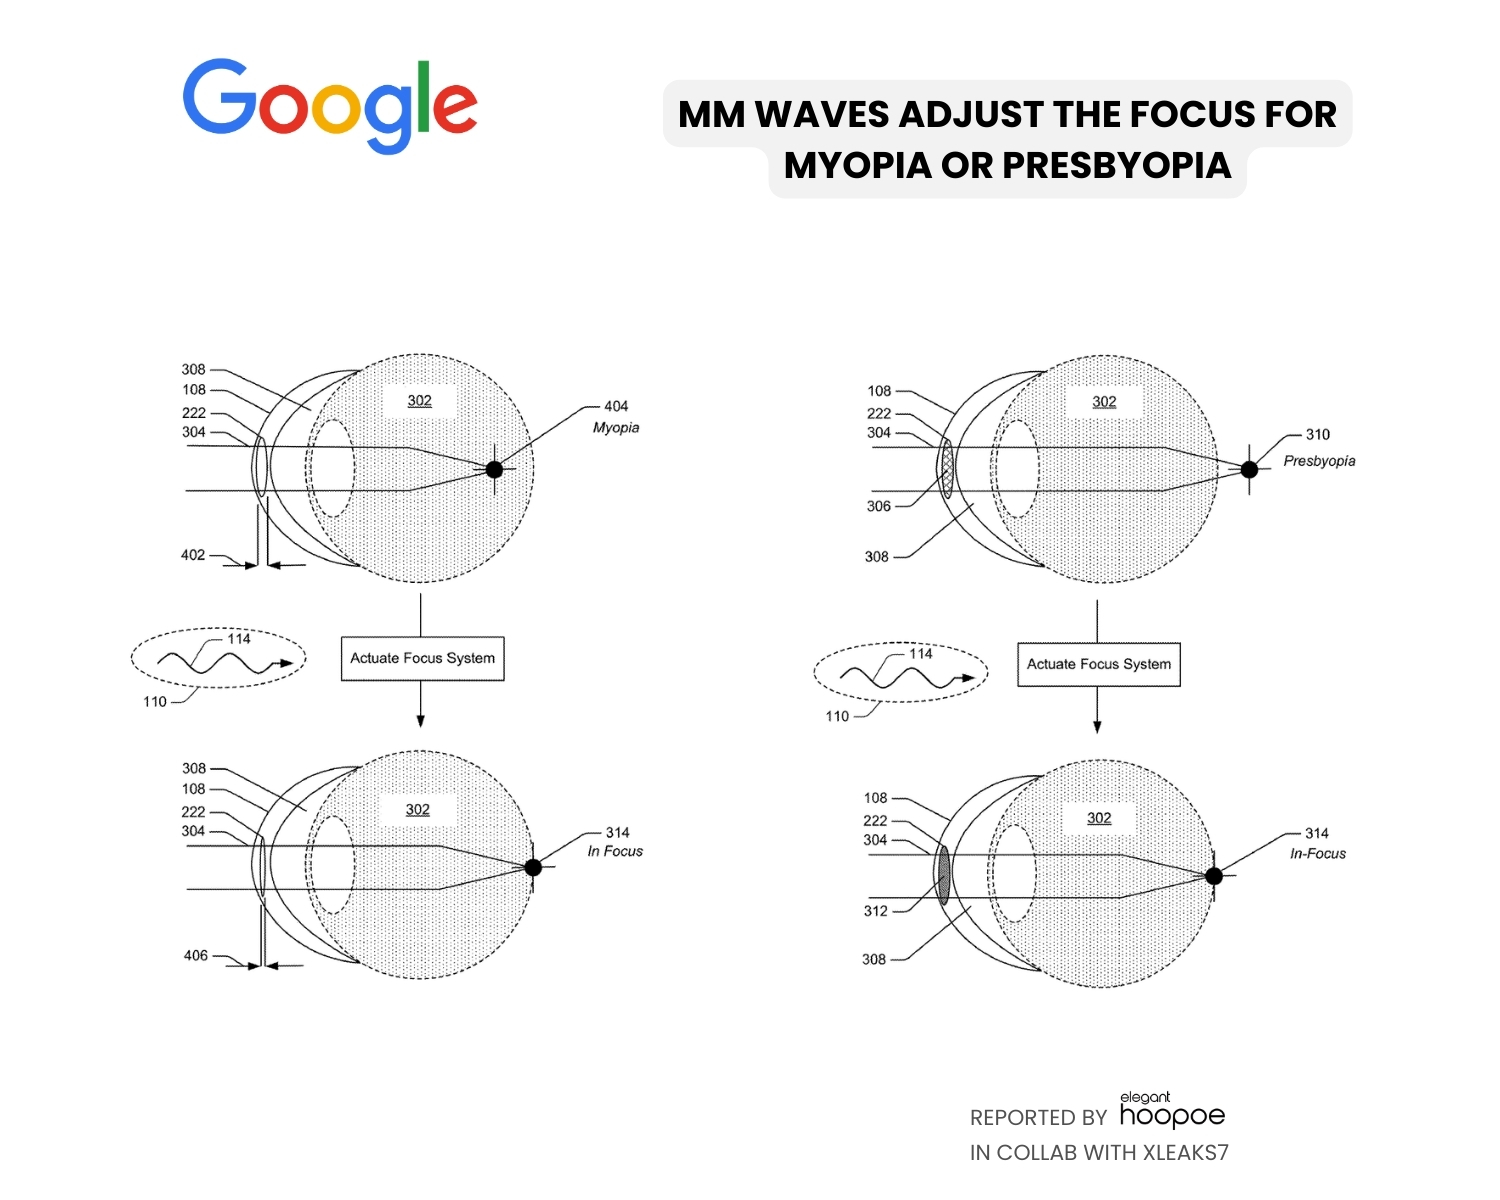 mm waves adjust focus for myopia and presbyopia